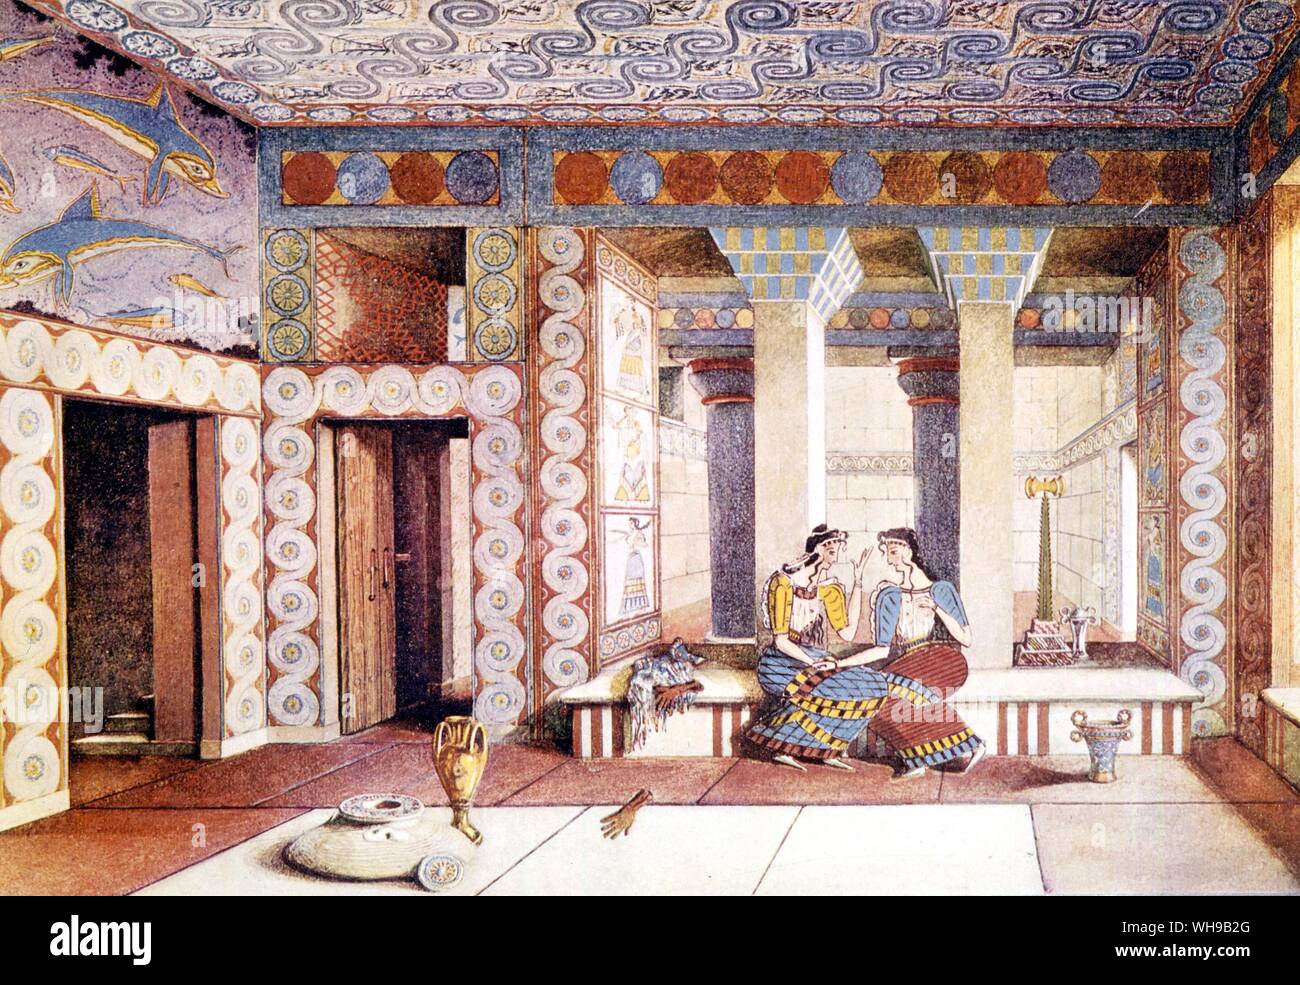 Artist impression of Palace of Knossos Crete Stock Photo